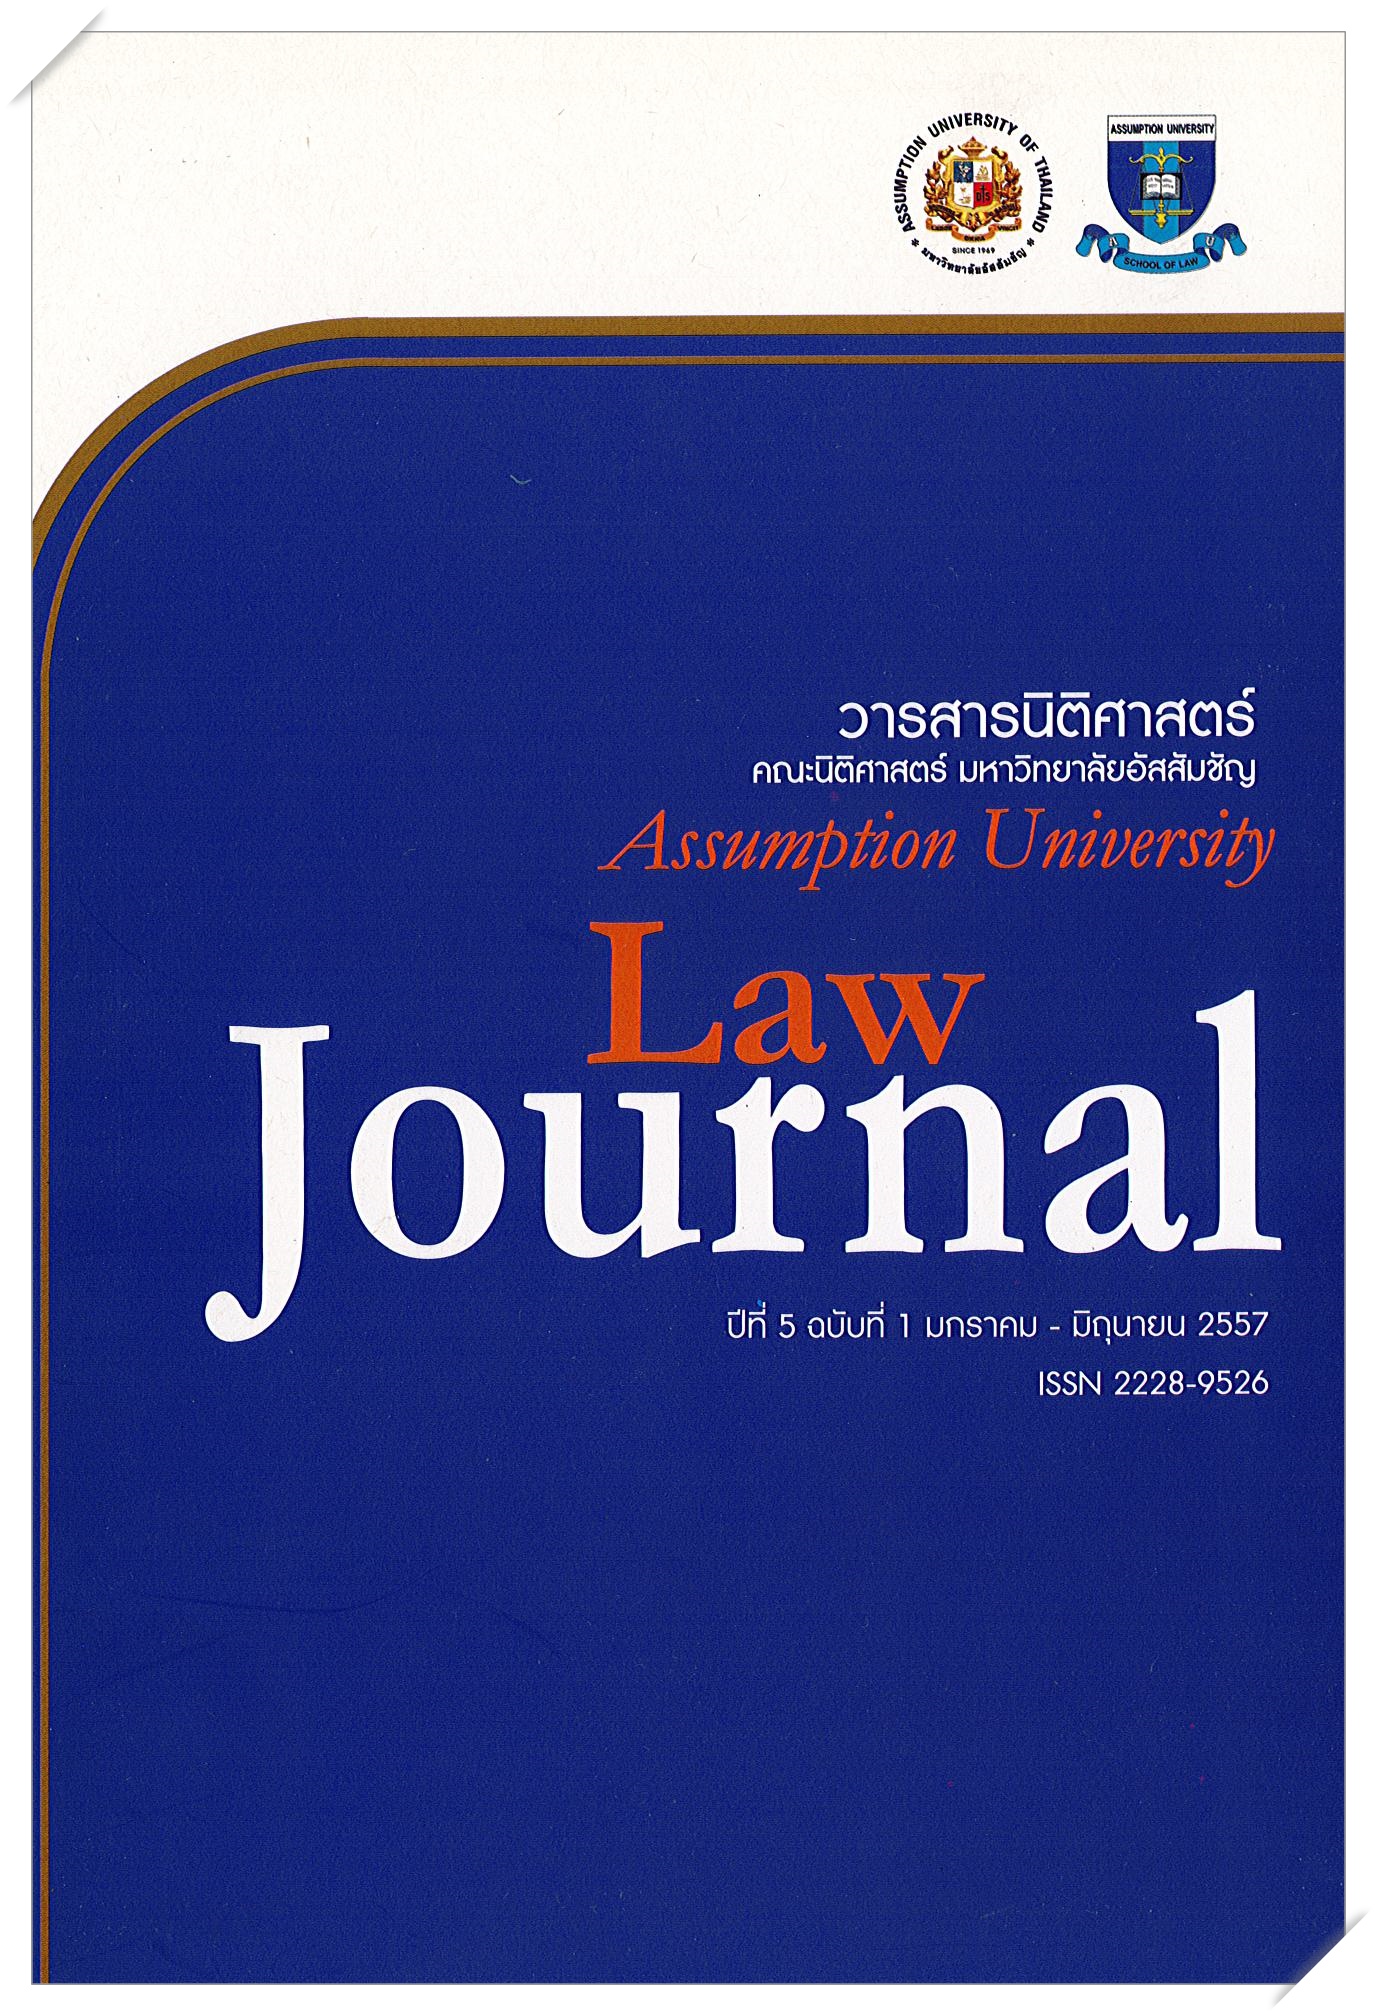 					View Vol. 5 No. 1 (2014): วารสารนิติศาสตร์ ปีที่ 5 ฉบับที่ 1 มกราคม-มิถุนายน 2557
				